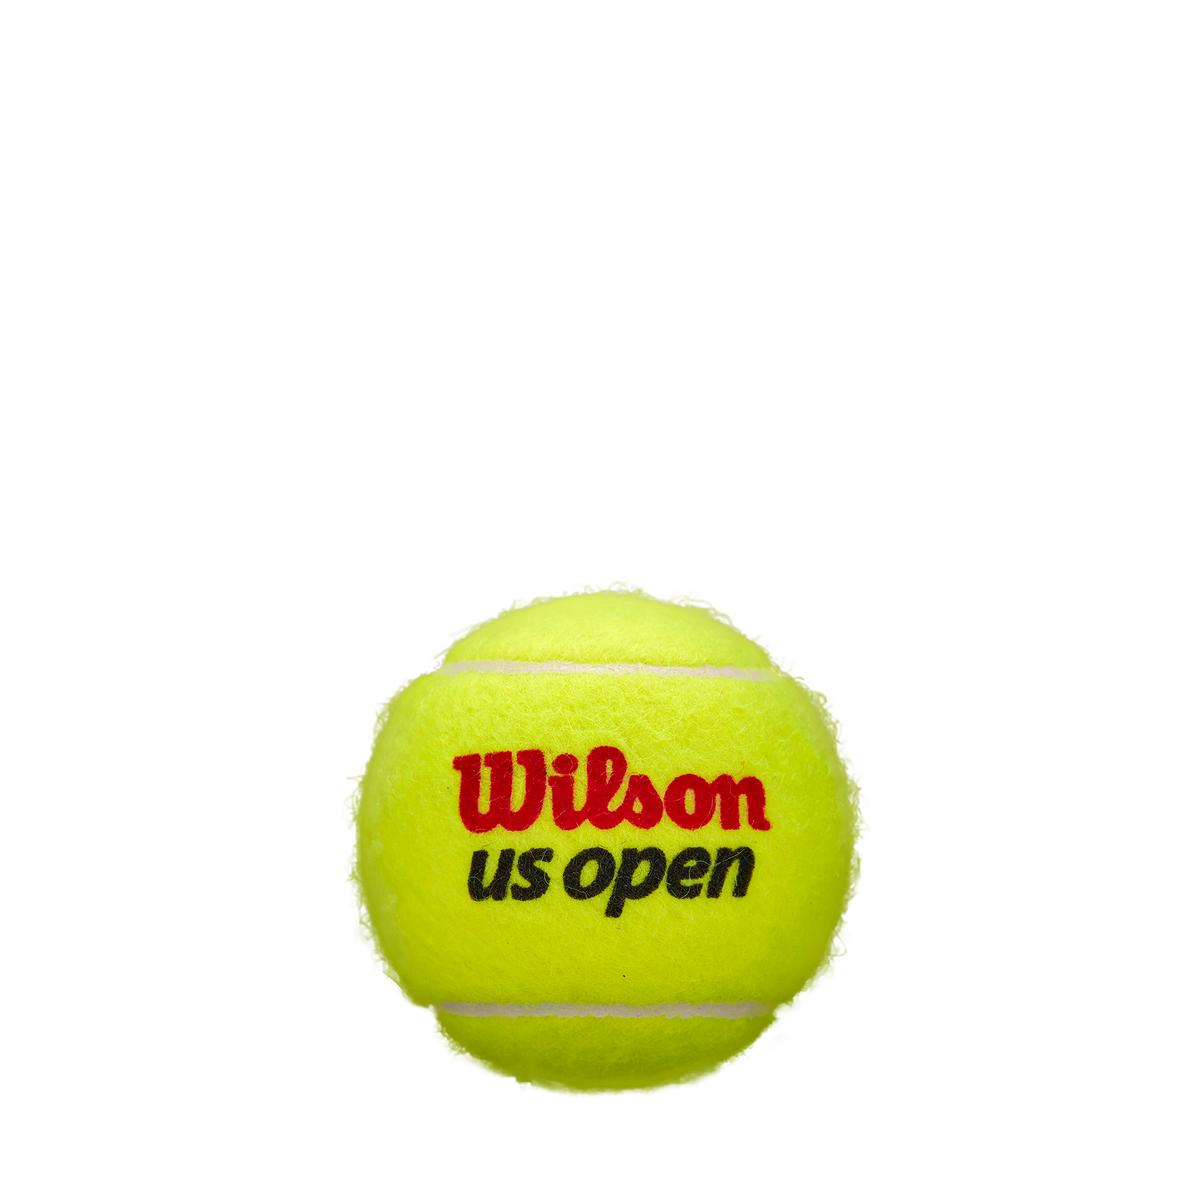 Bola de Tênis US Open Regular Extra Duty